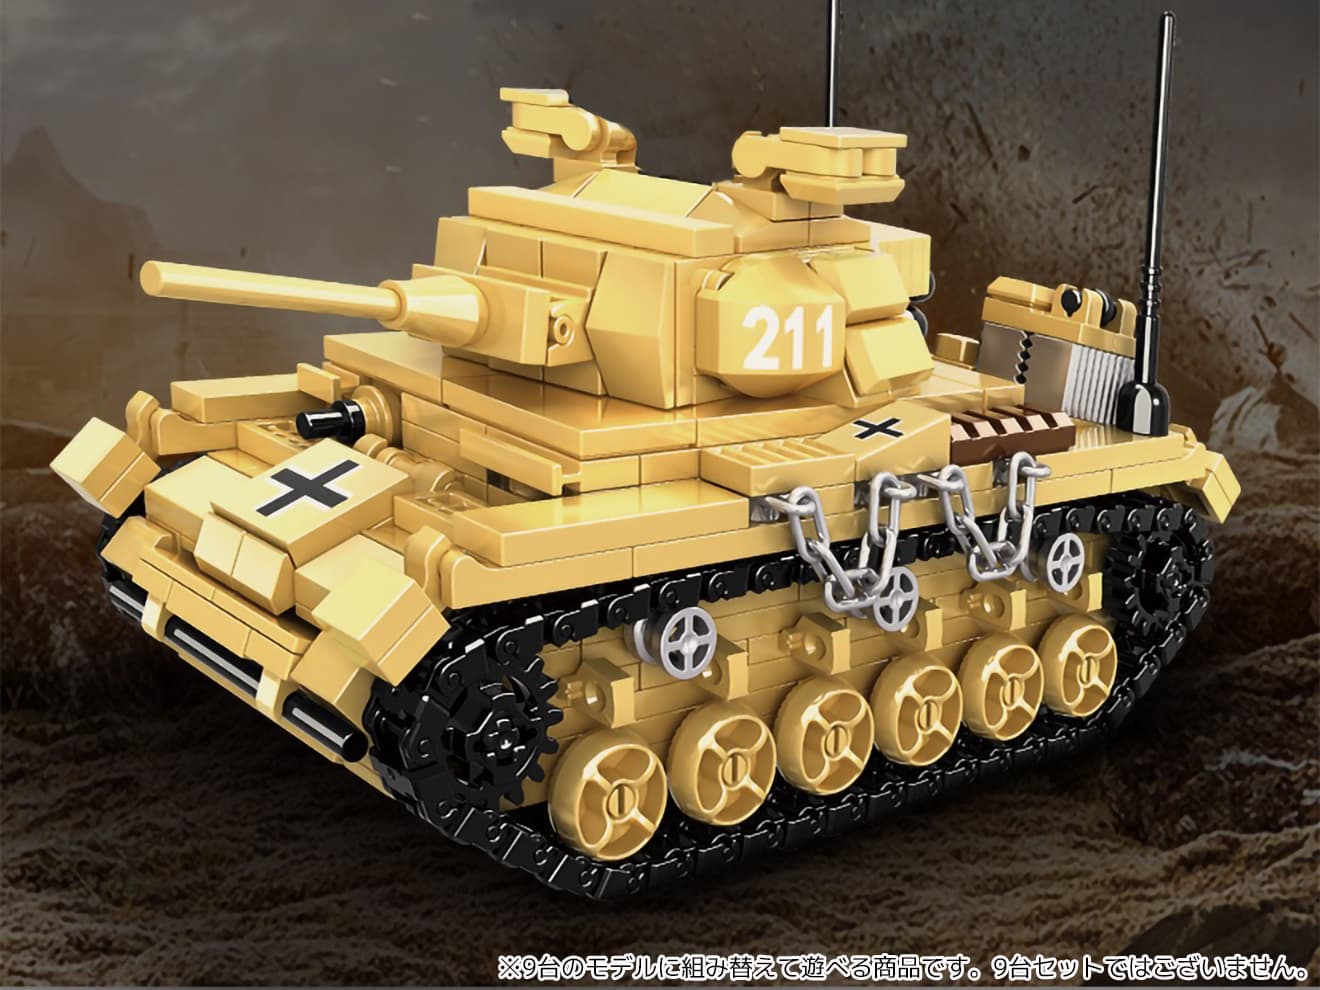 AFM ワールドタンクシリーズ  9in1 タイガー戦車シリーズ 563Blocks